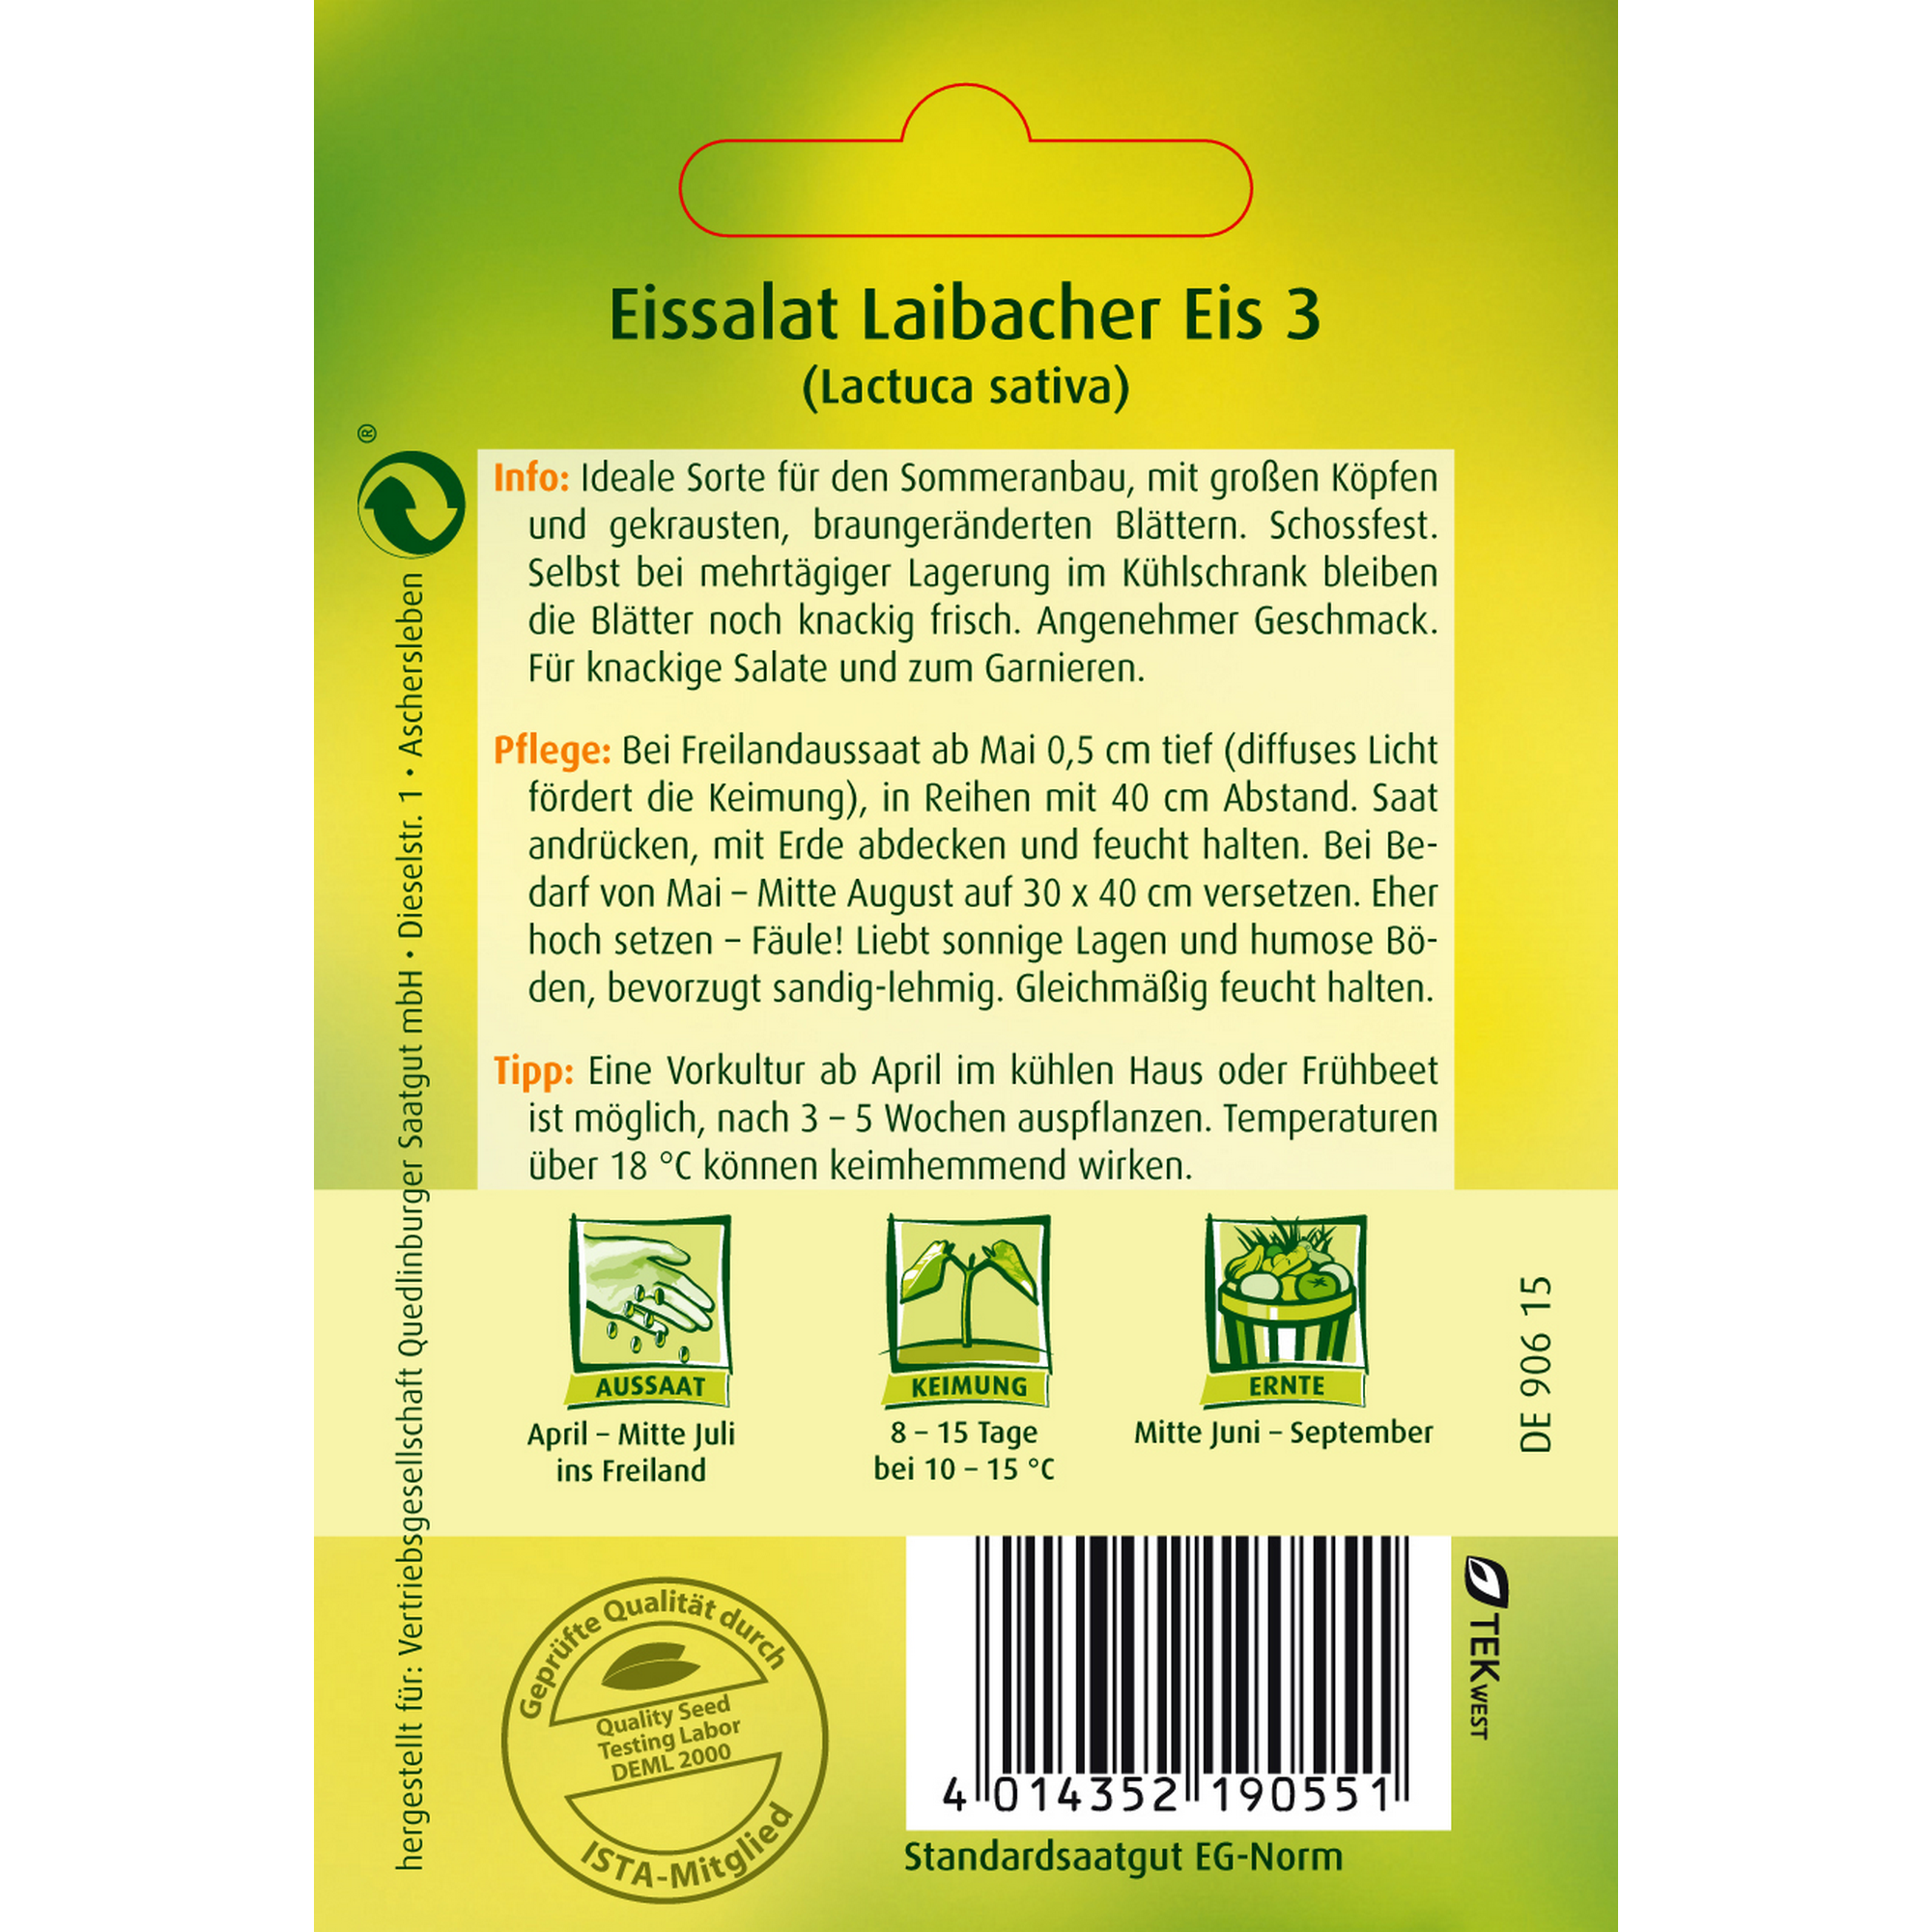 Eissalat 'Laibacher Eis 3' + product picture